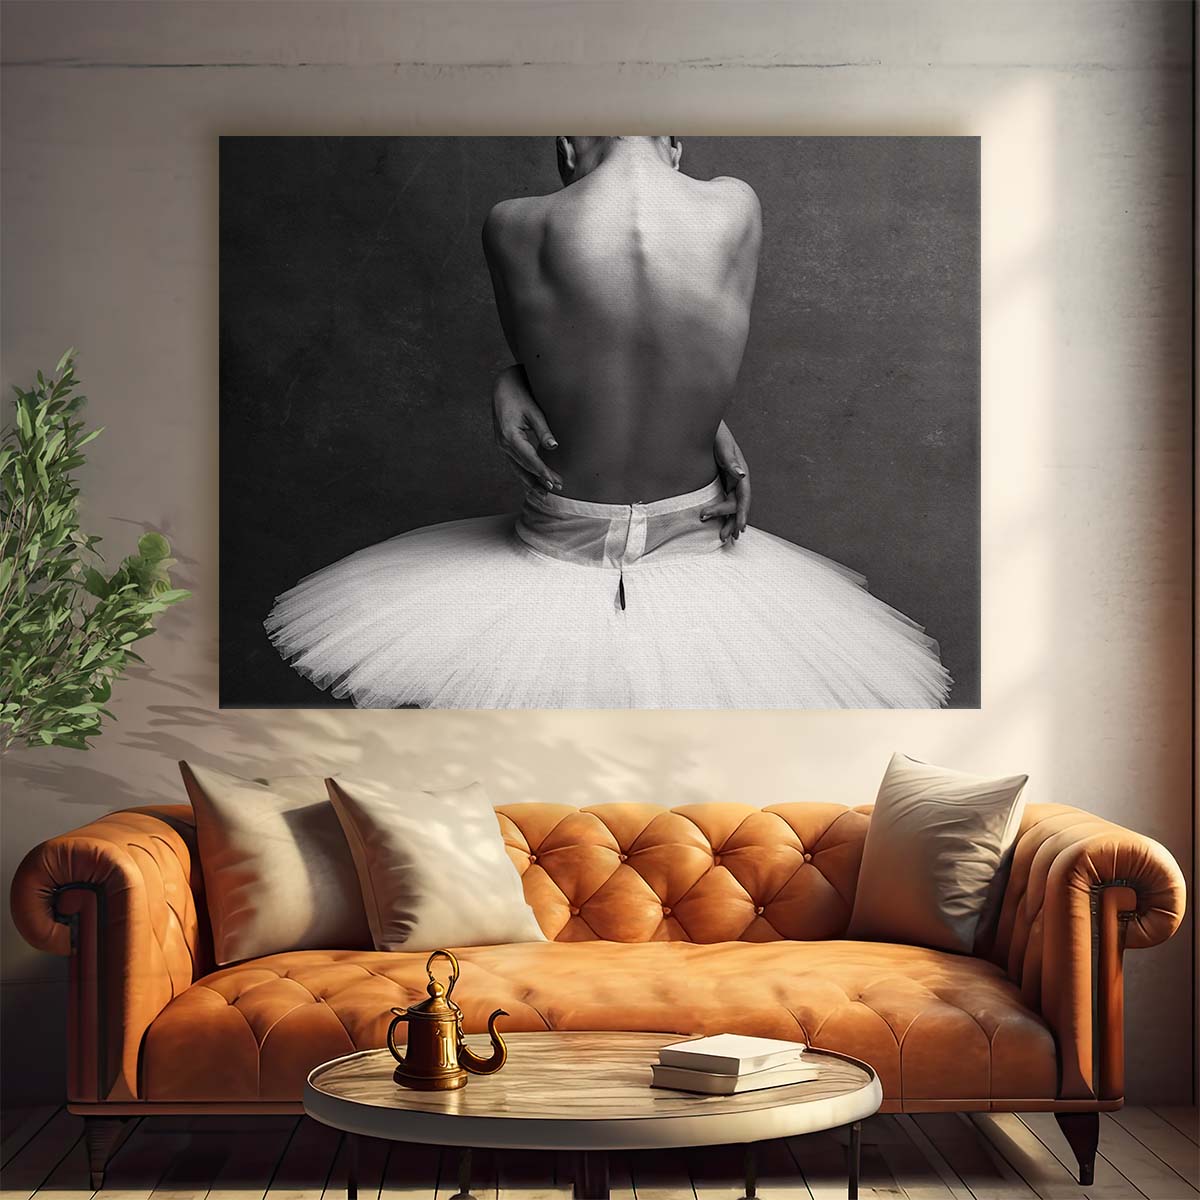 Elegant Ballerina Pose in Monochrome - Ballet Photography Wall Art